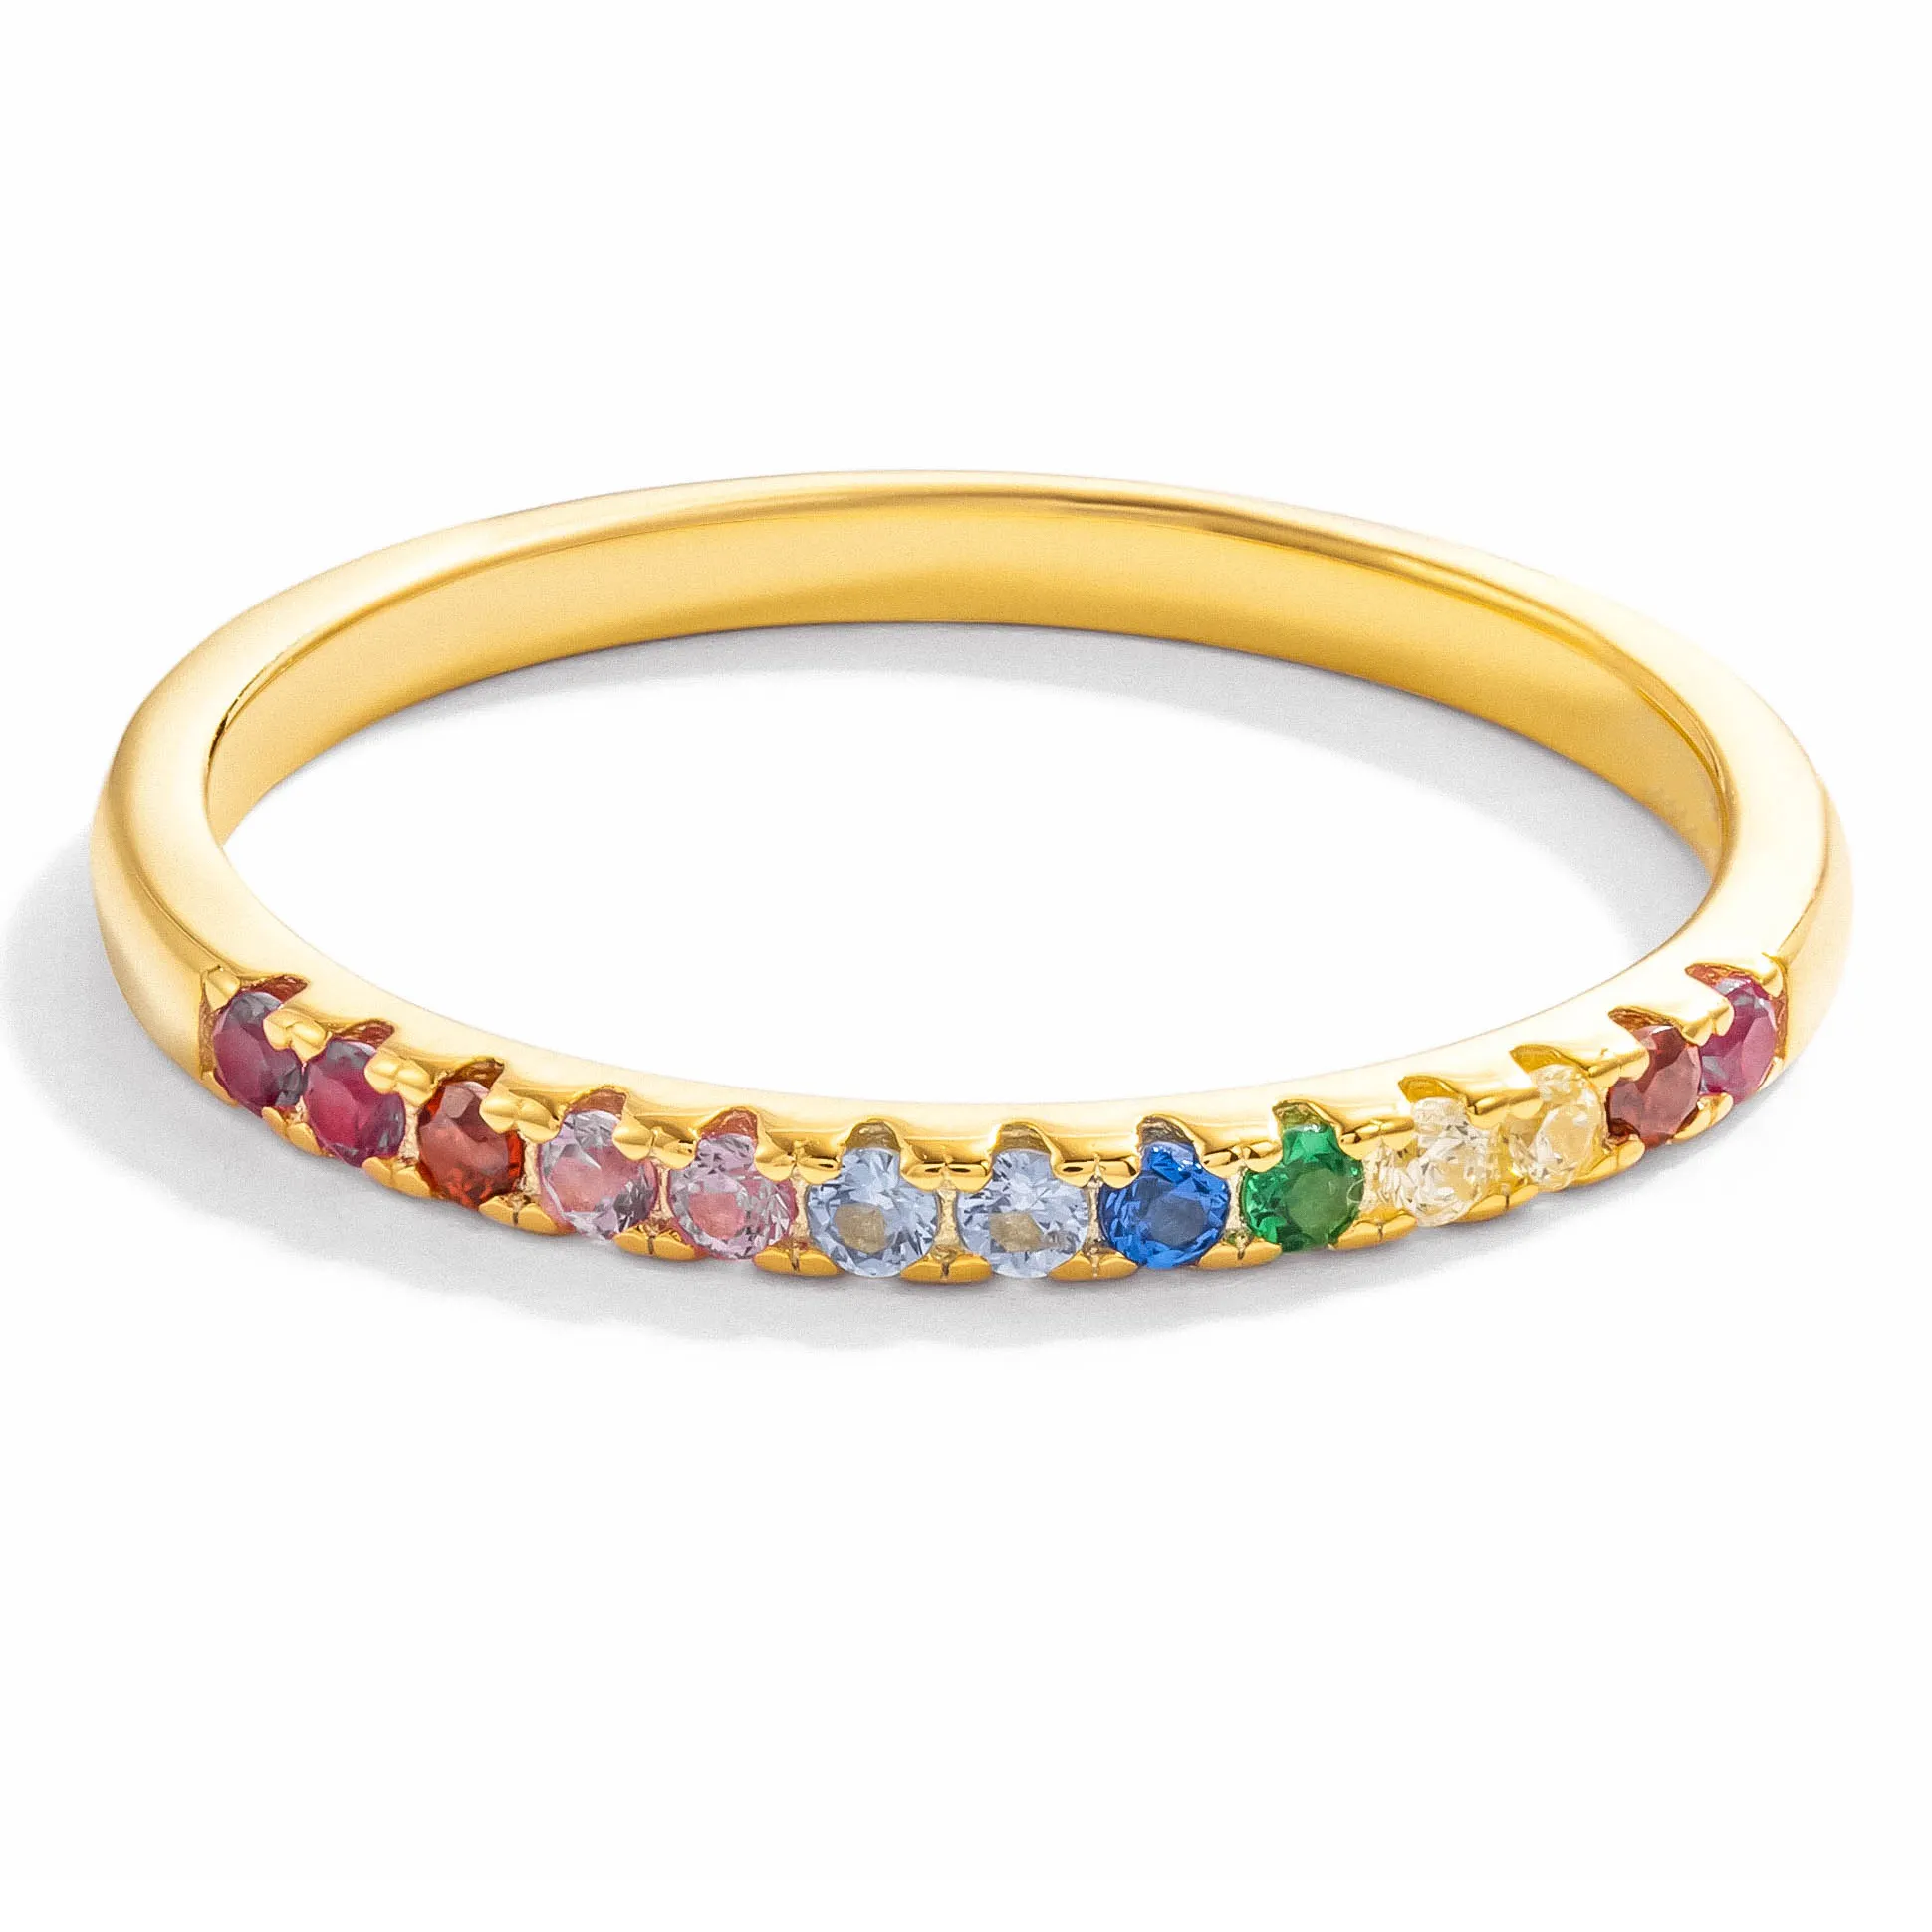 Gemnel jewelry fashion rainbow diamond band gem stone 925 silver band ring